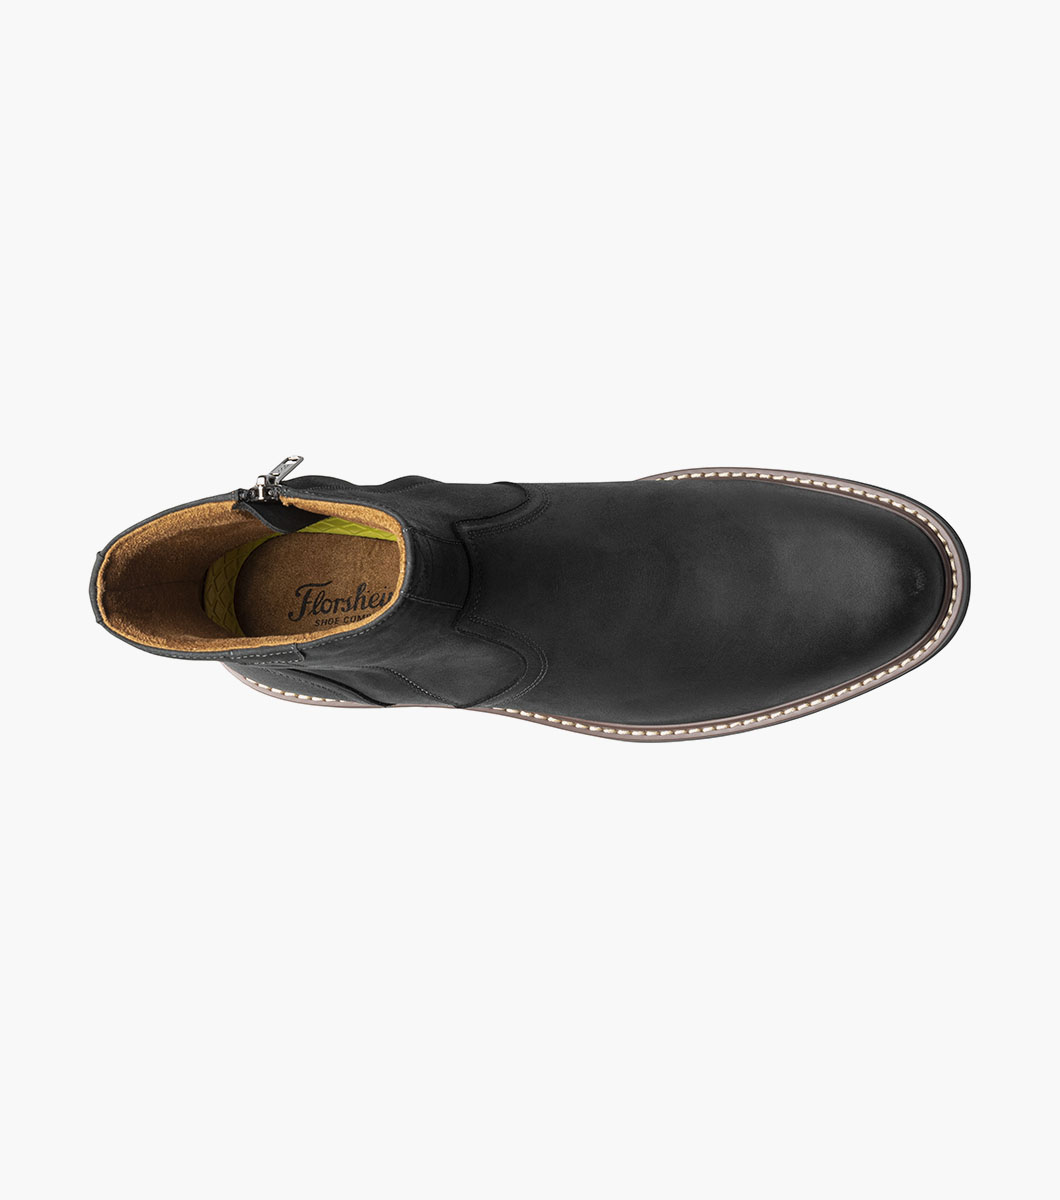 Norwalk Plain Toe Side Zip Boot Men’s Casual Shoes | Florsheim.com